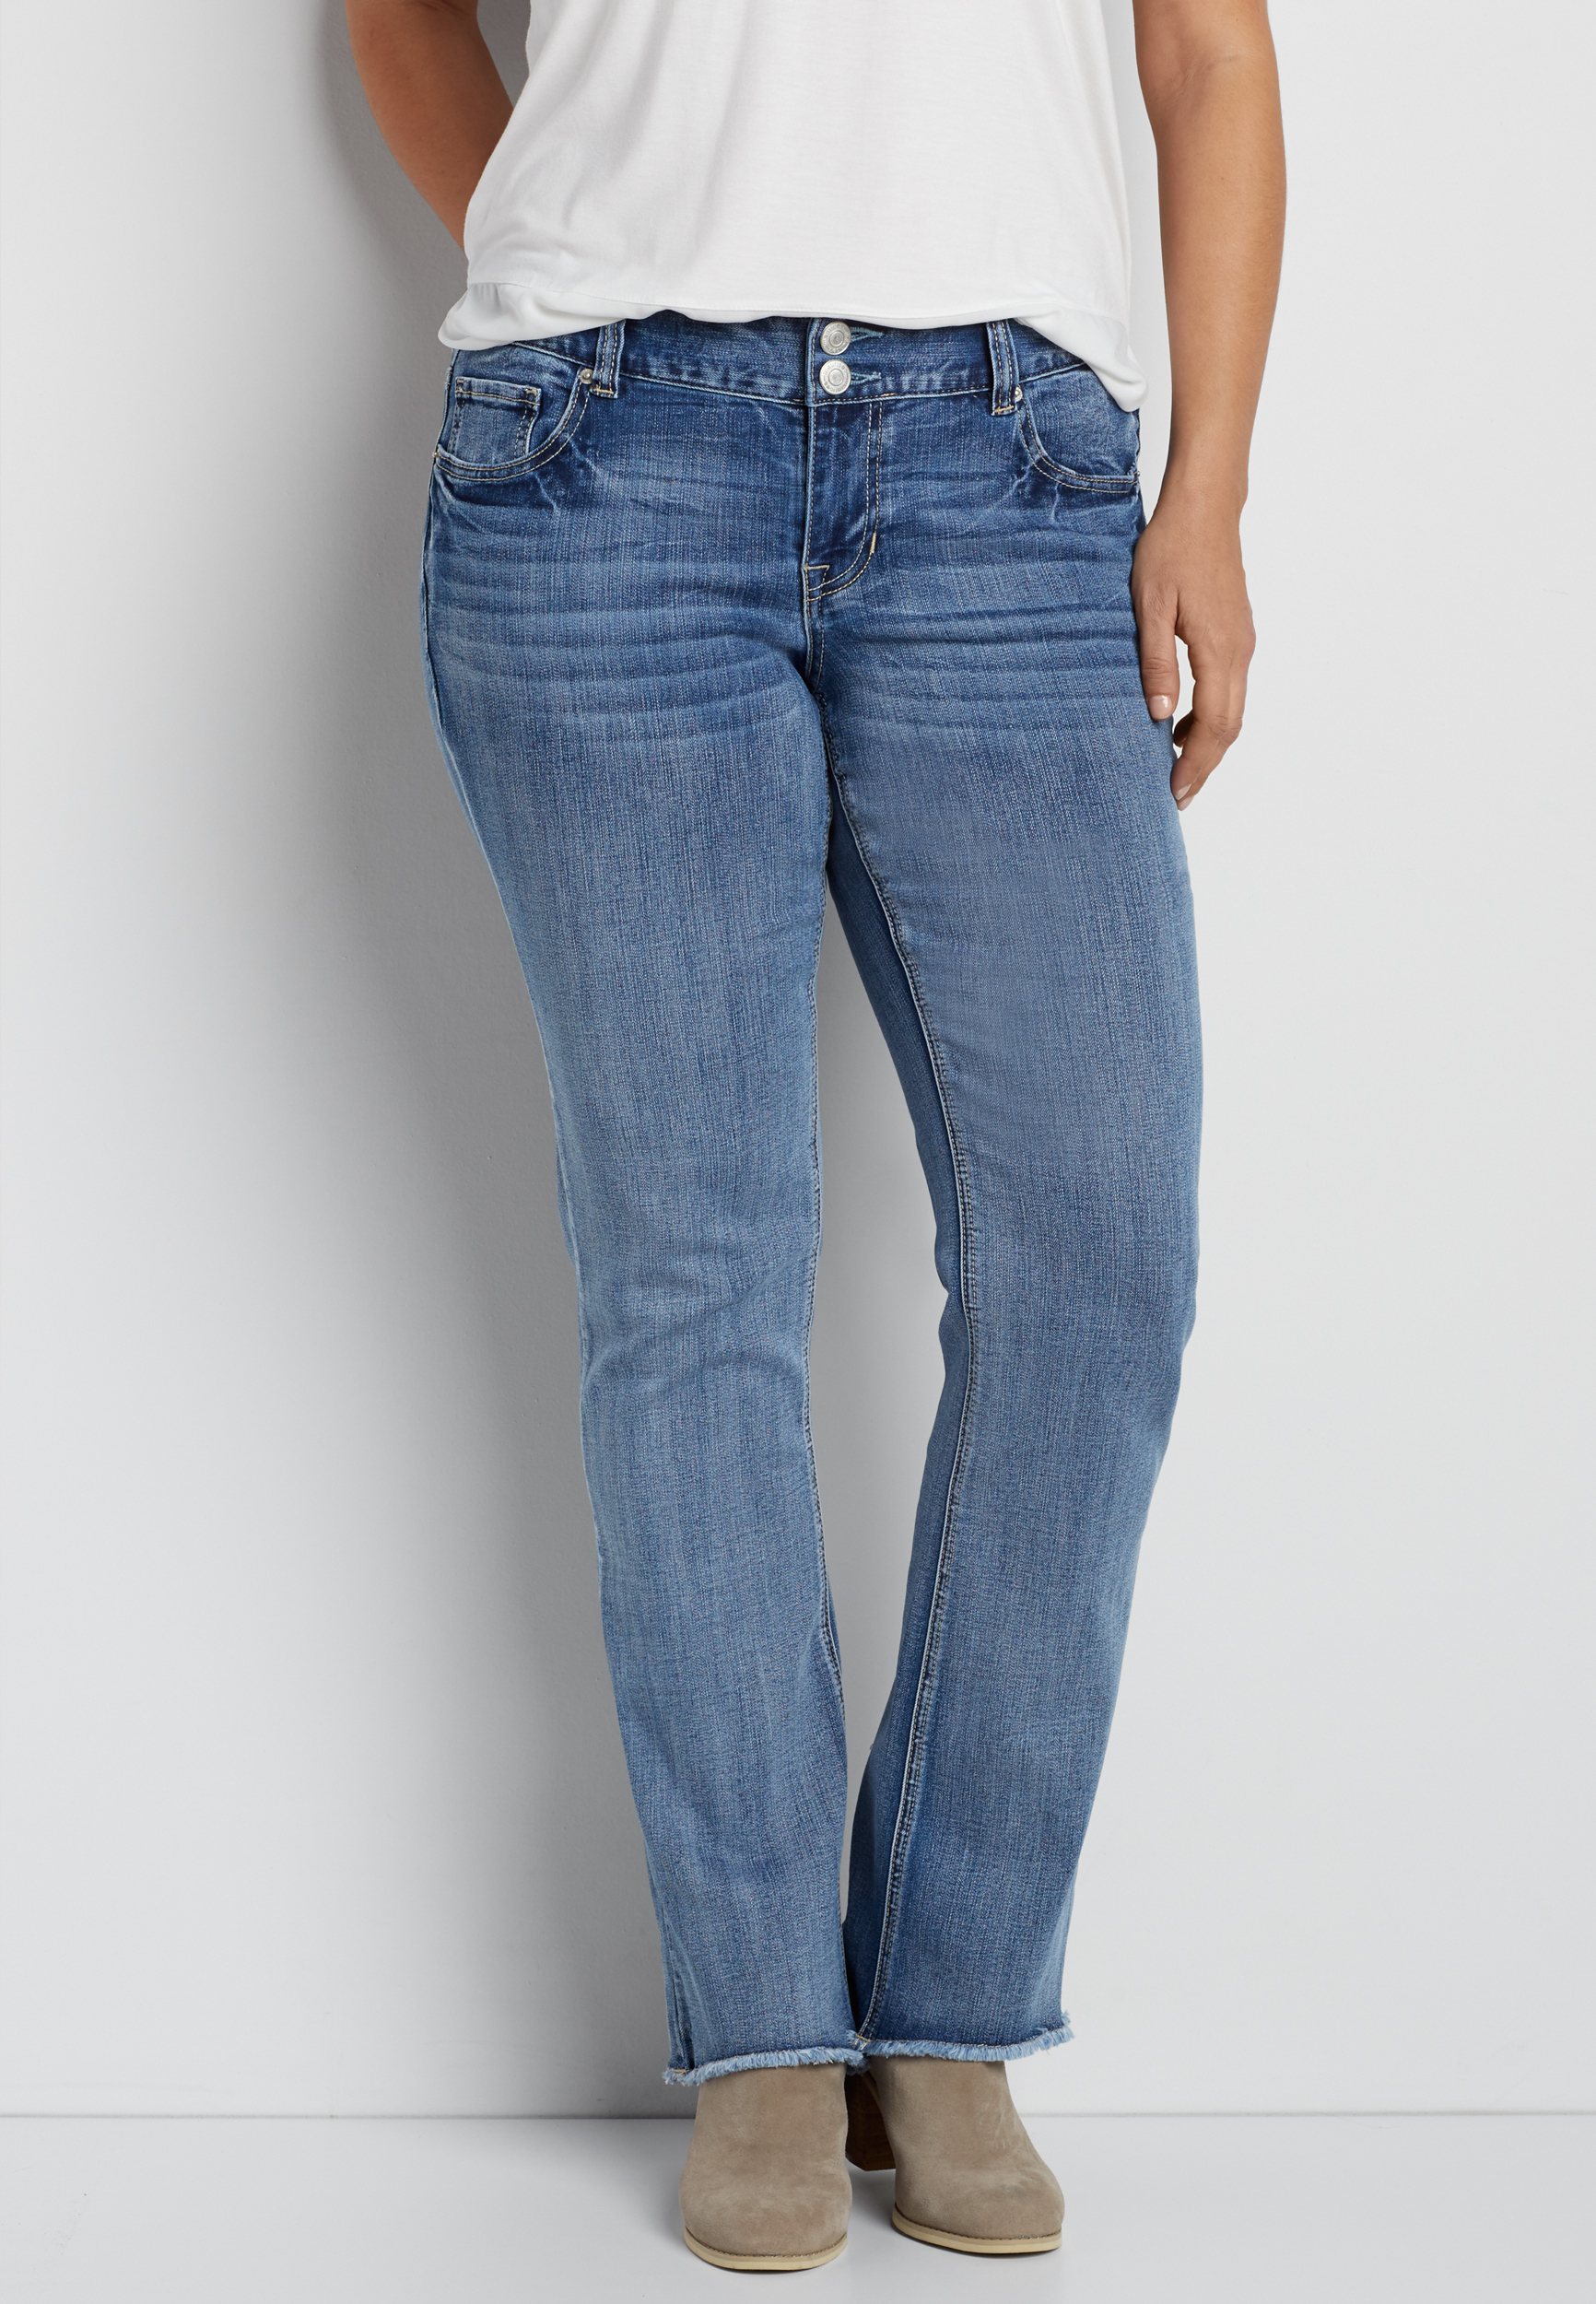 frayed bottom jeans plus size